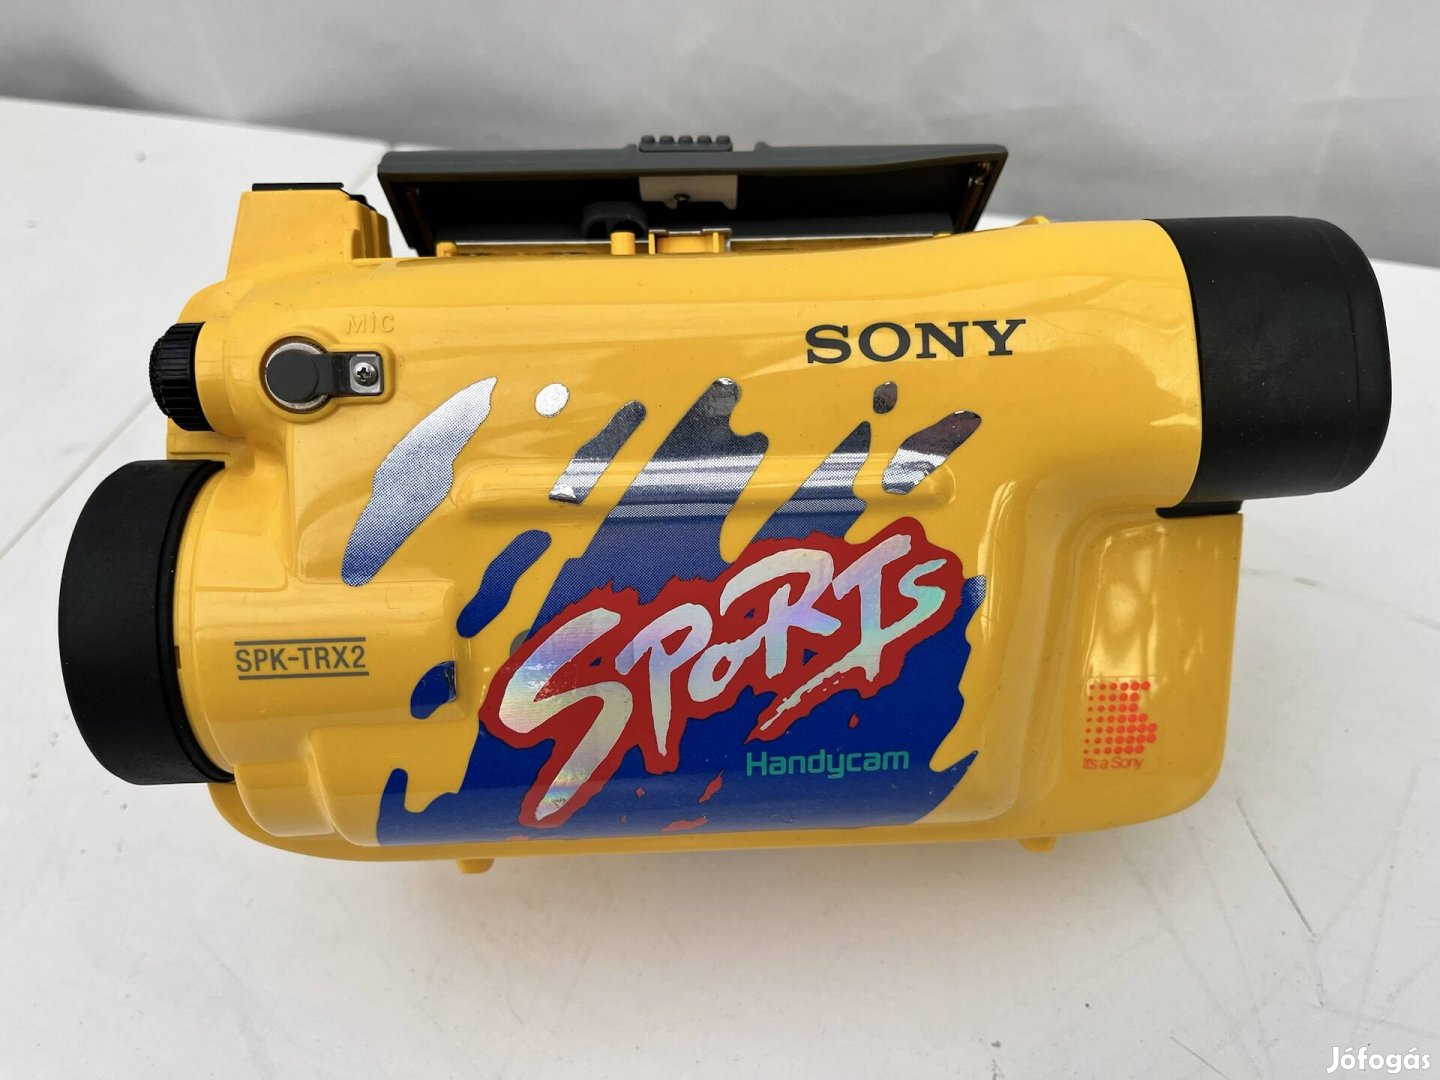 Sony SPK-Trx2 Handycam tok viz alatti vízálló retro